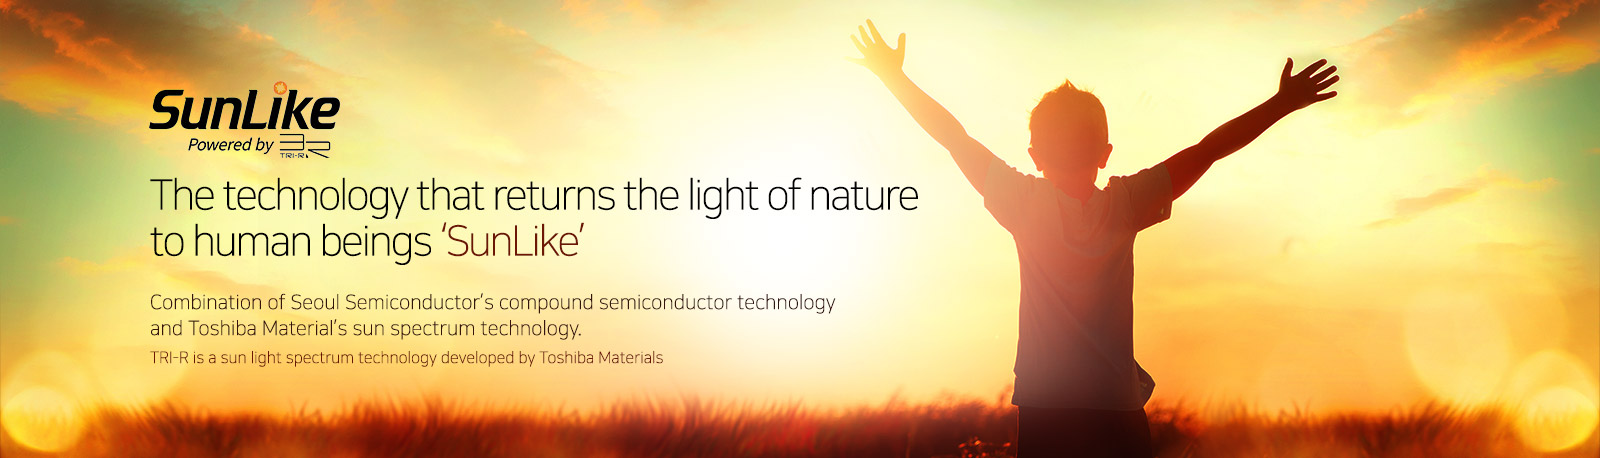 SunLike LED techology from Seoul Semiconductor and Toshiba